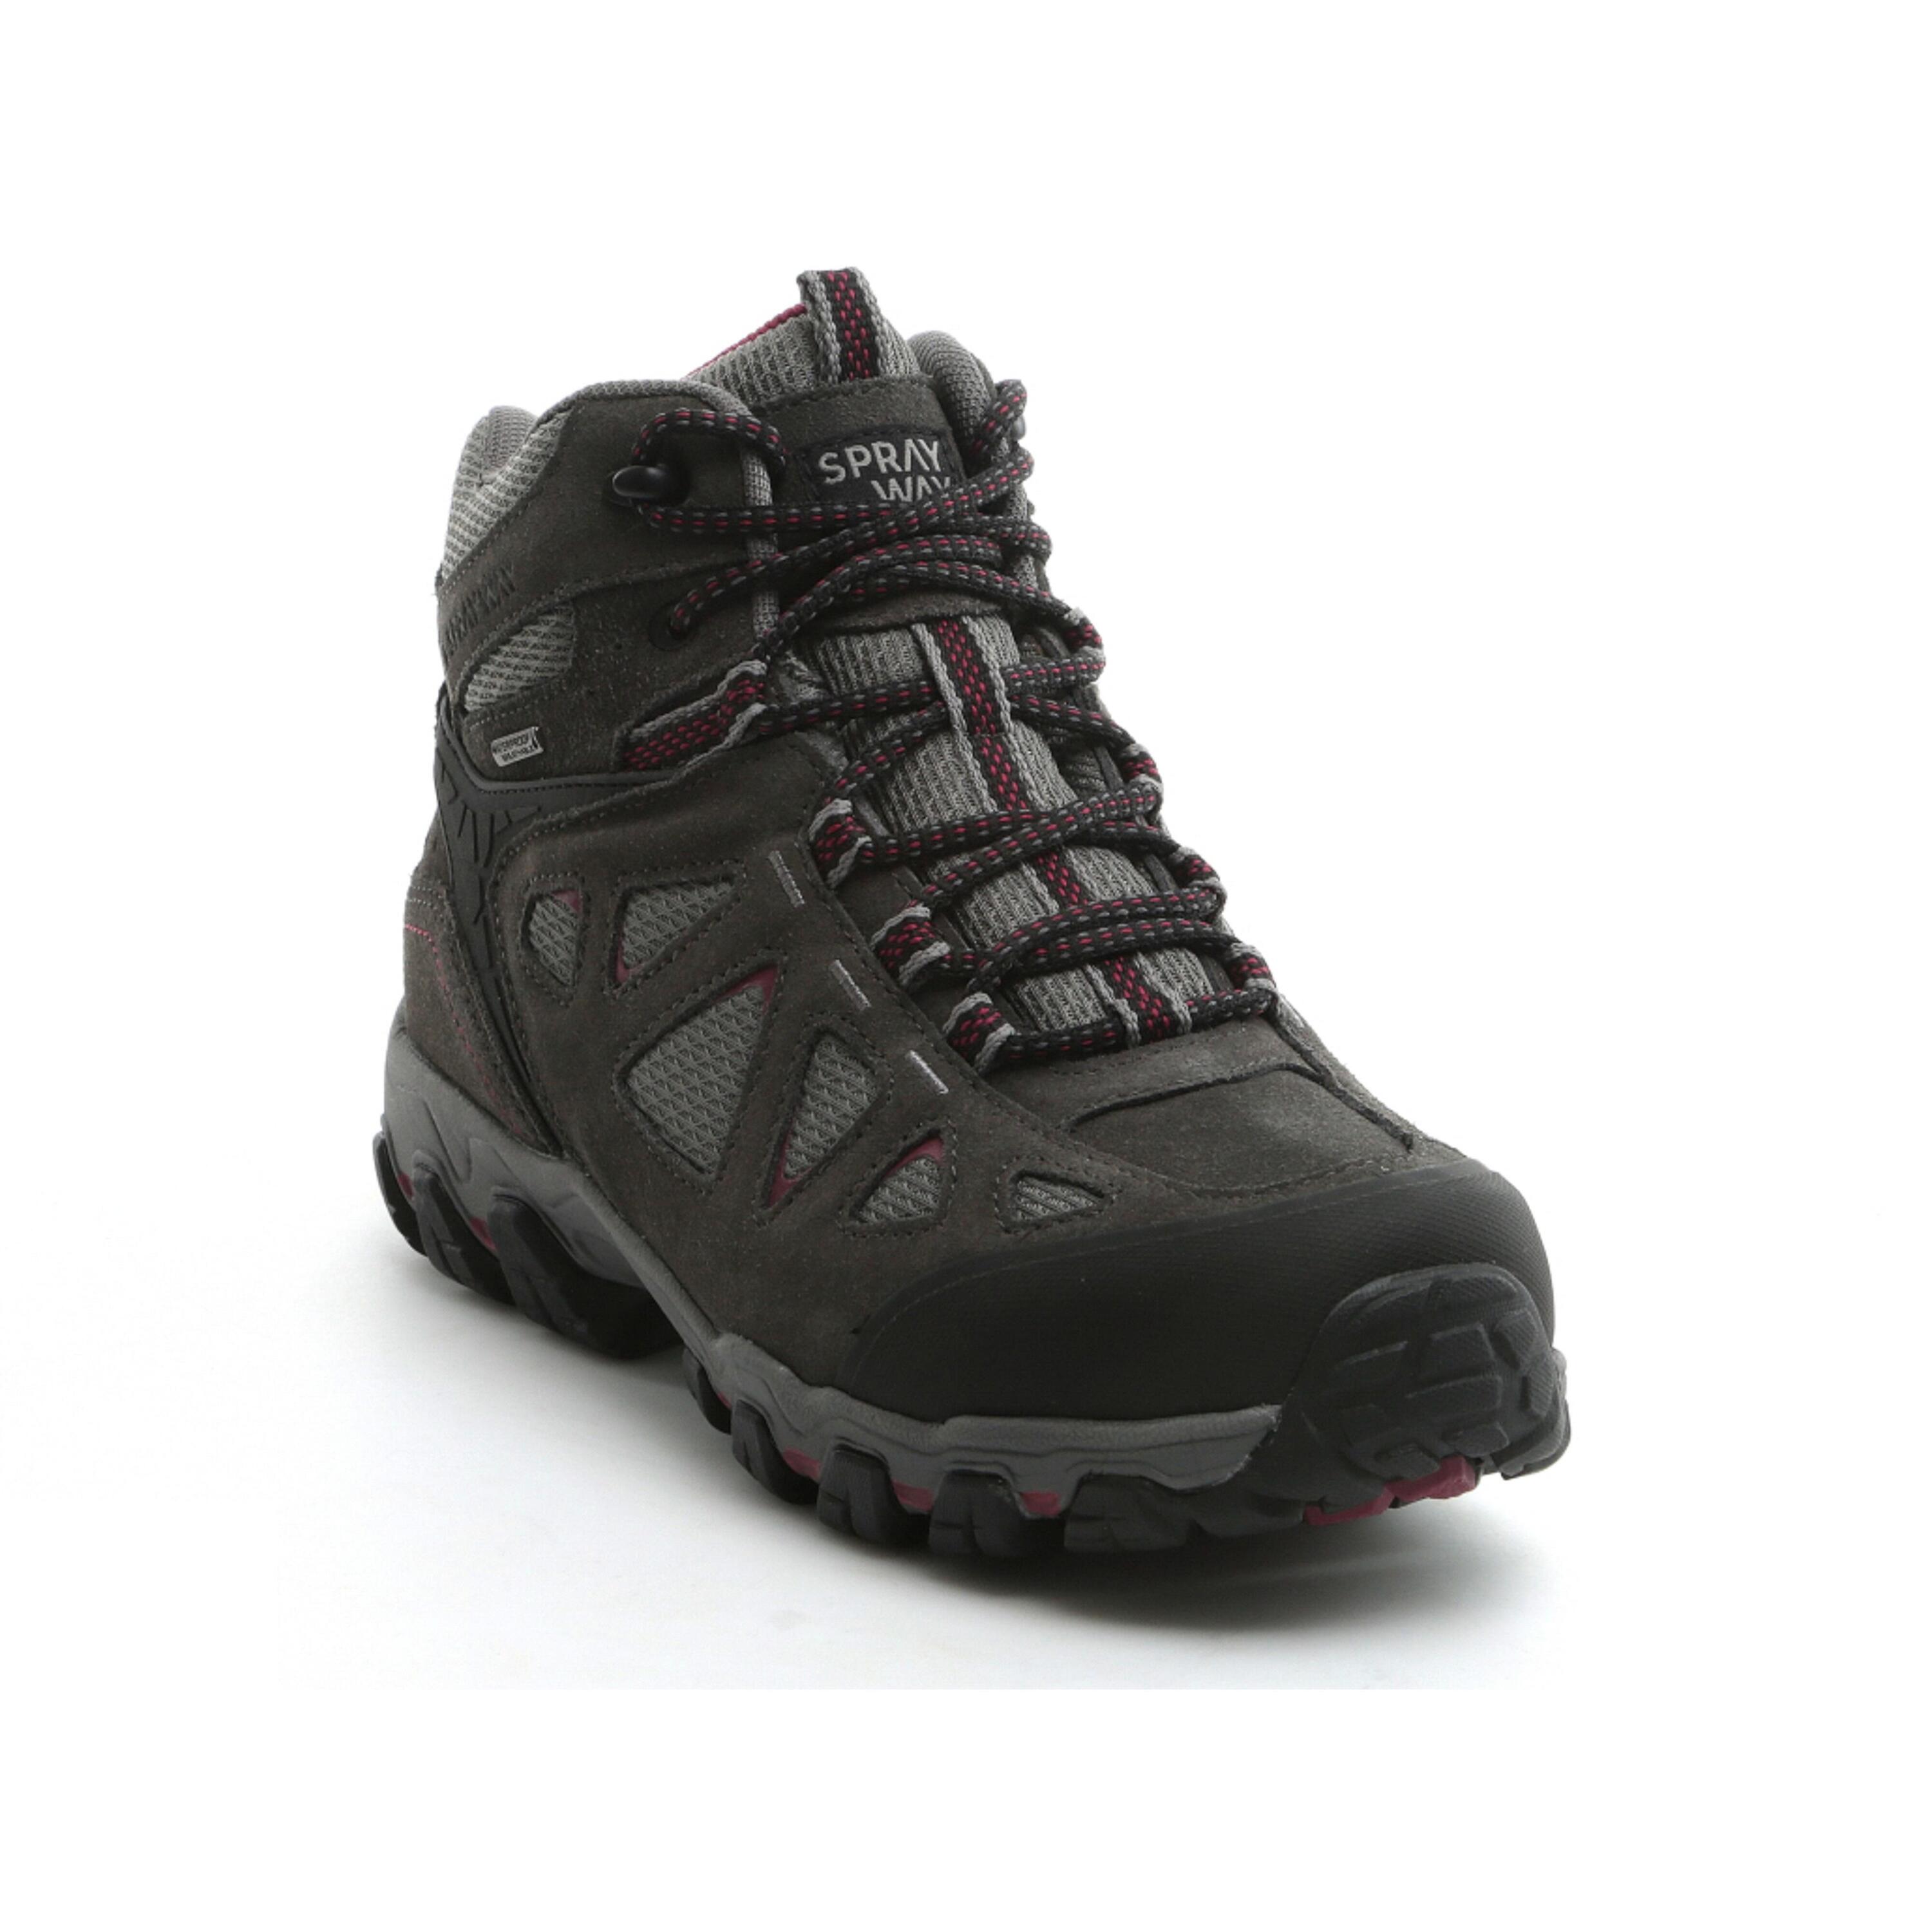 Women's waterproof walking boots - Sprayway Iona mid - Black 4/5